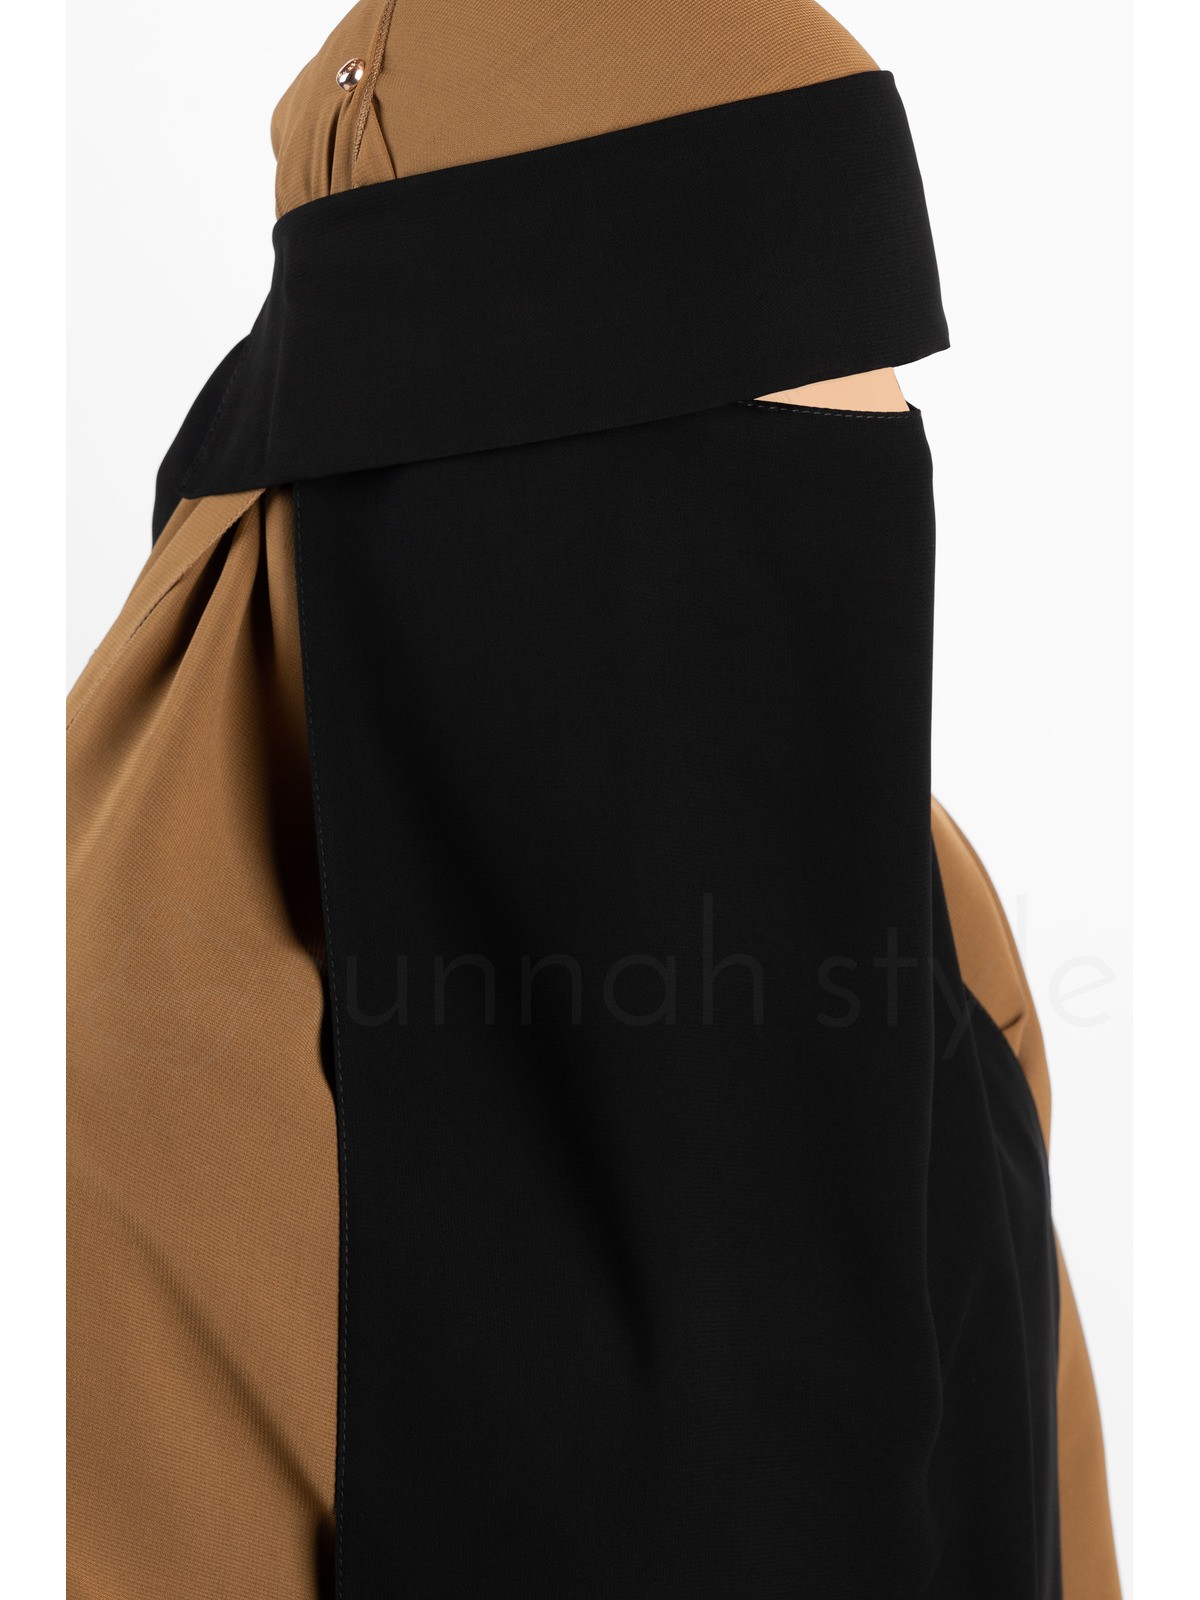 Sunnah Style - Long One Layer Flap Niqab (Black)